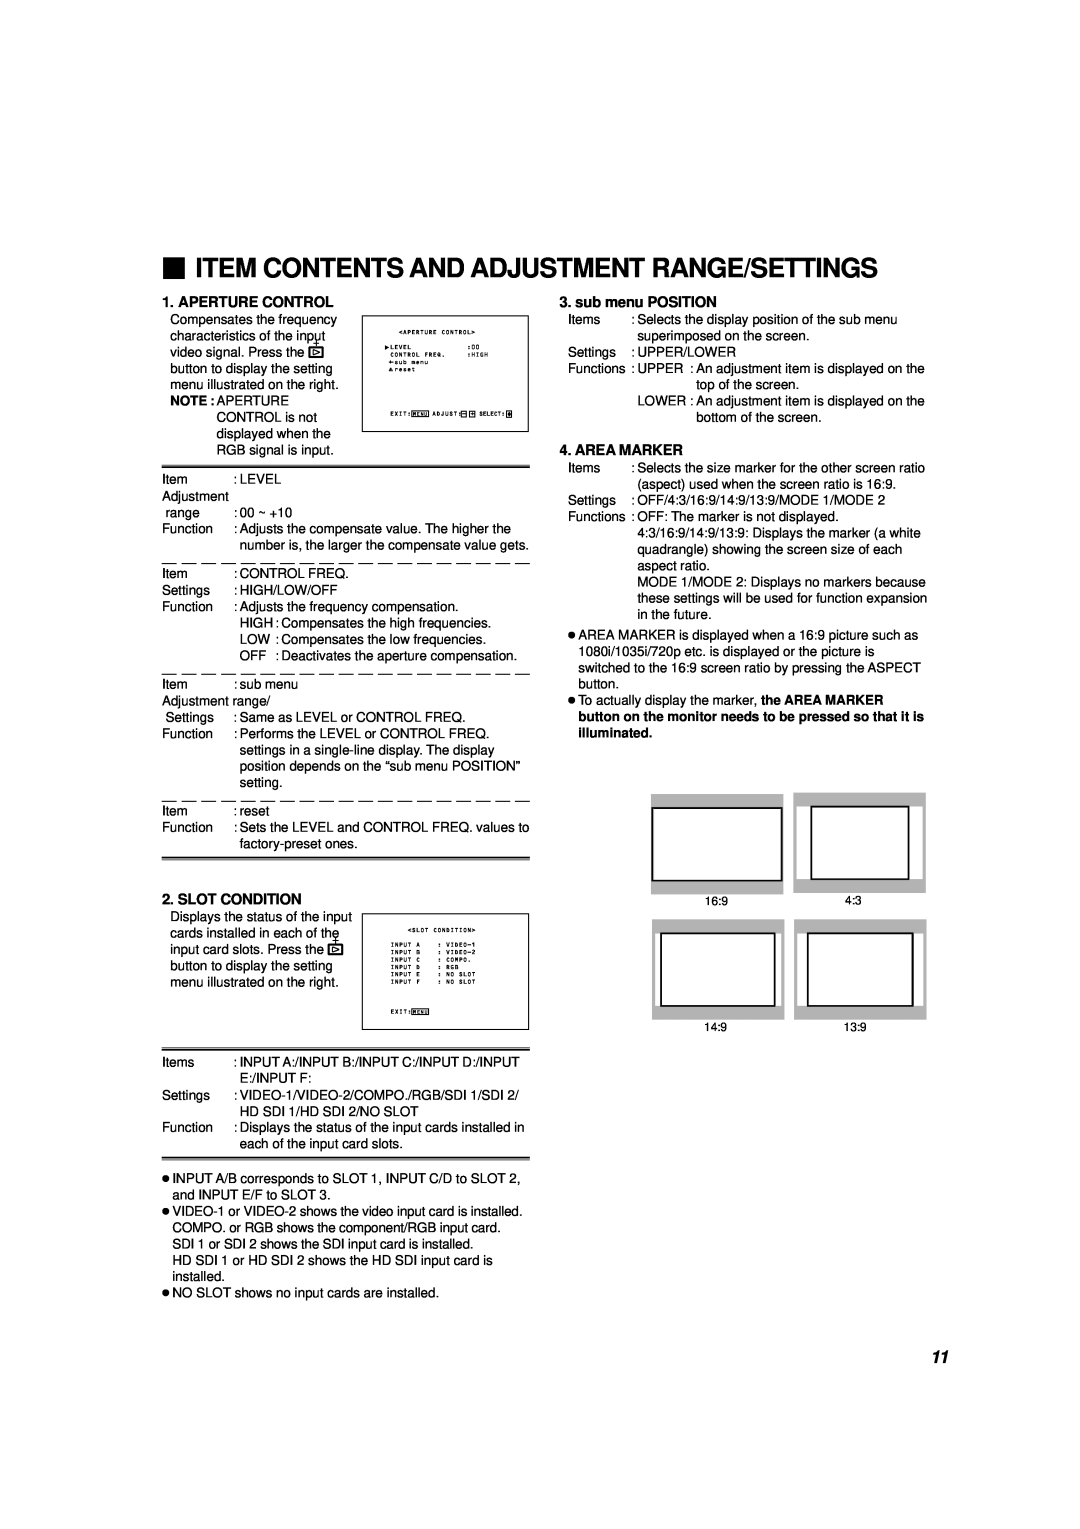 JVC V1700CG manual  Item Contents And Adjustment Range/Settings, Aperture Control, sub menu POSITION, Area Marker 